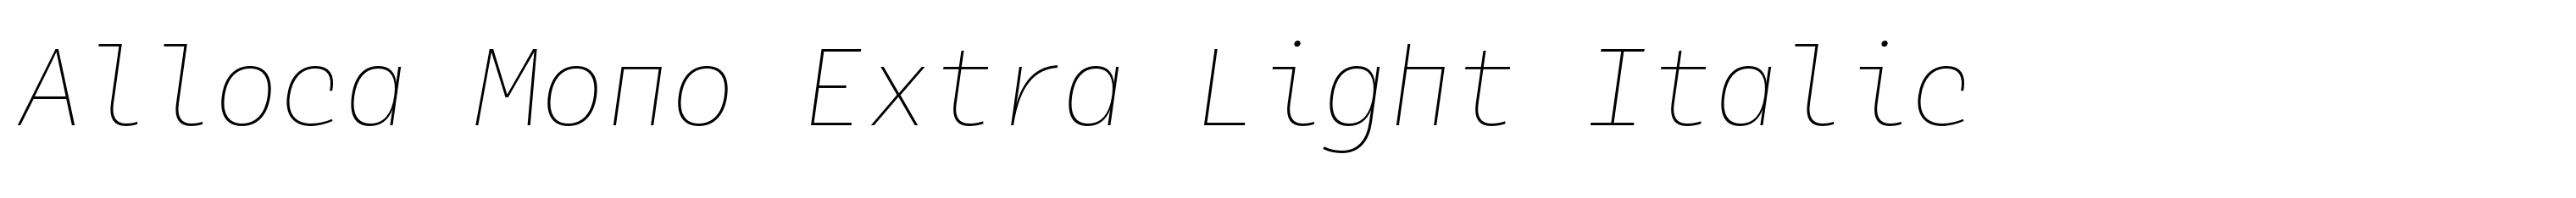 Alloca Mono Extra Light Italic